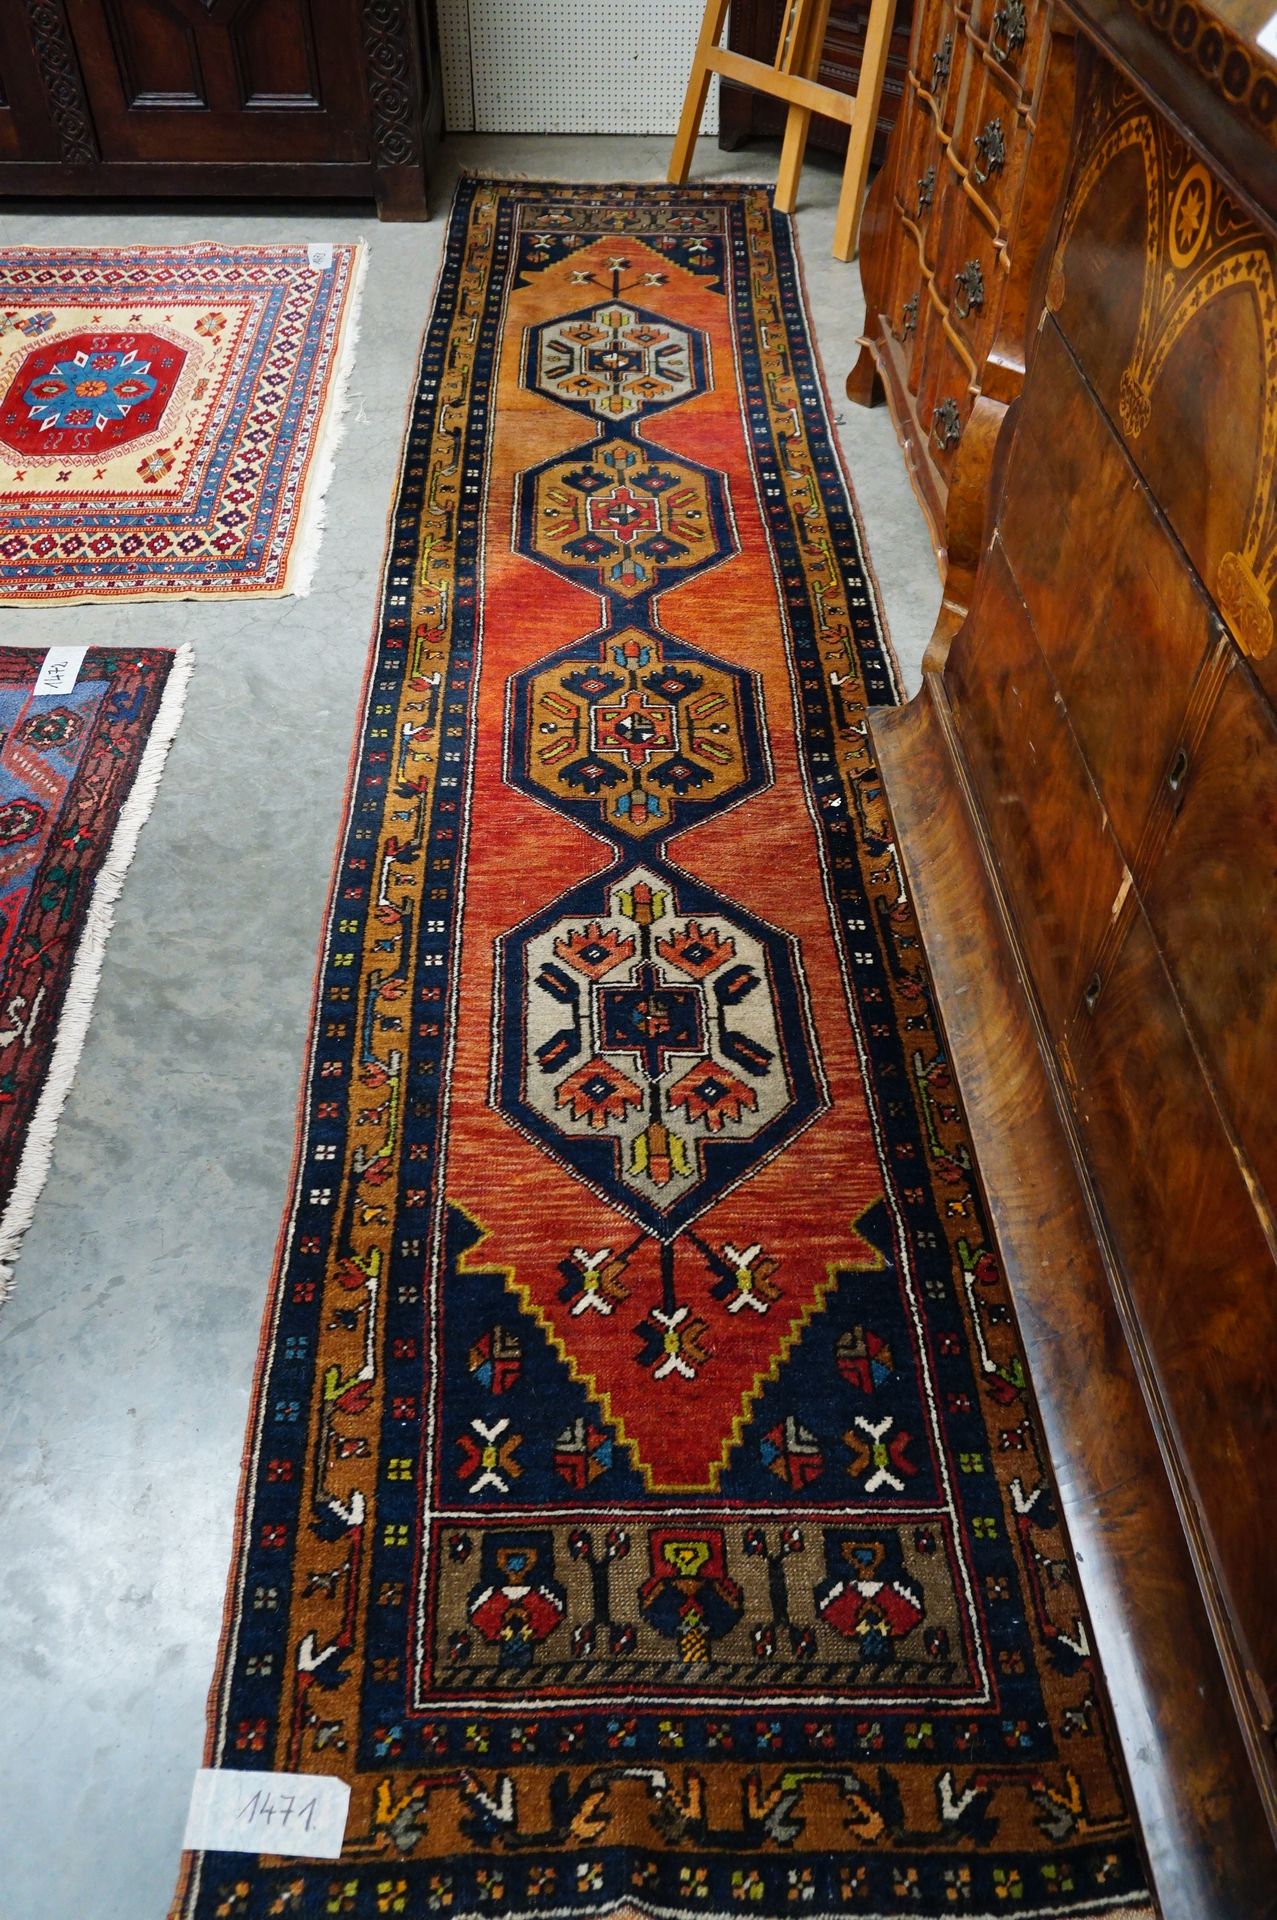 Null Iranian carpet - 3.25 x 0.70